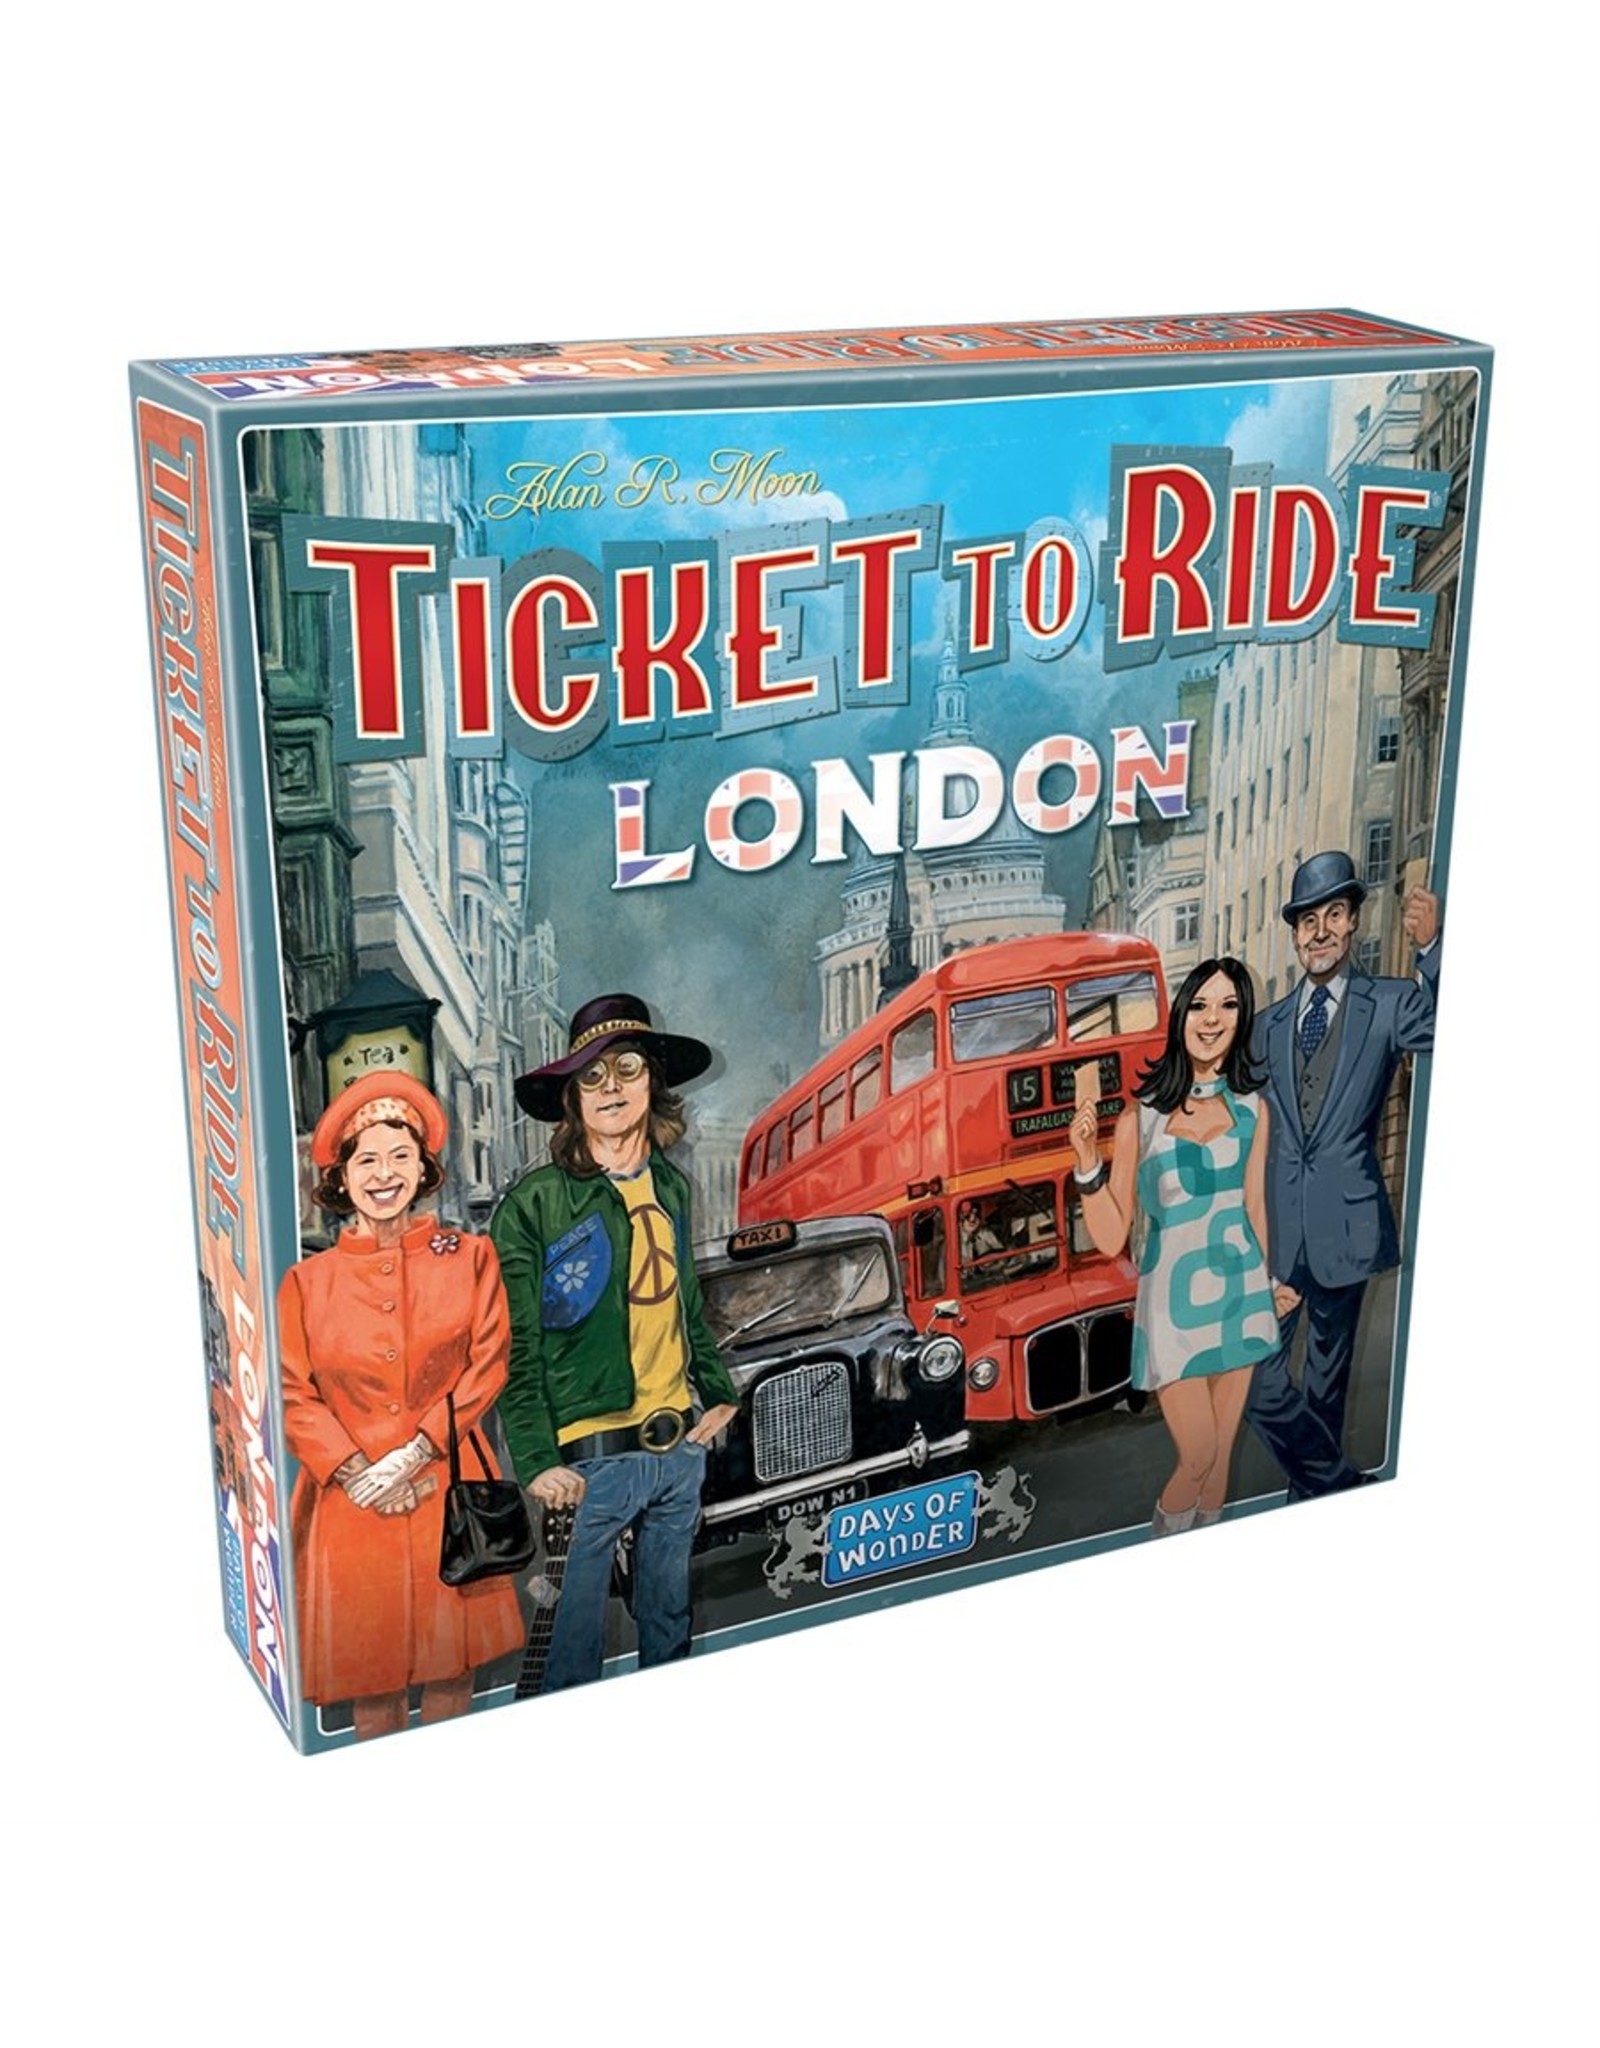 Days of Wonder Ticket to Ride Express: London